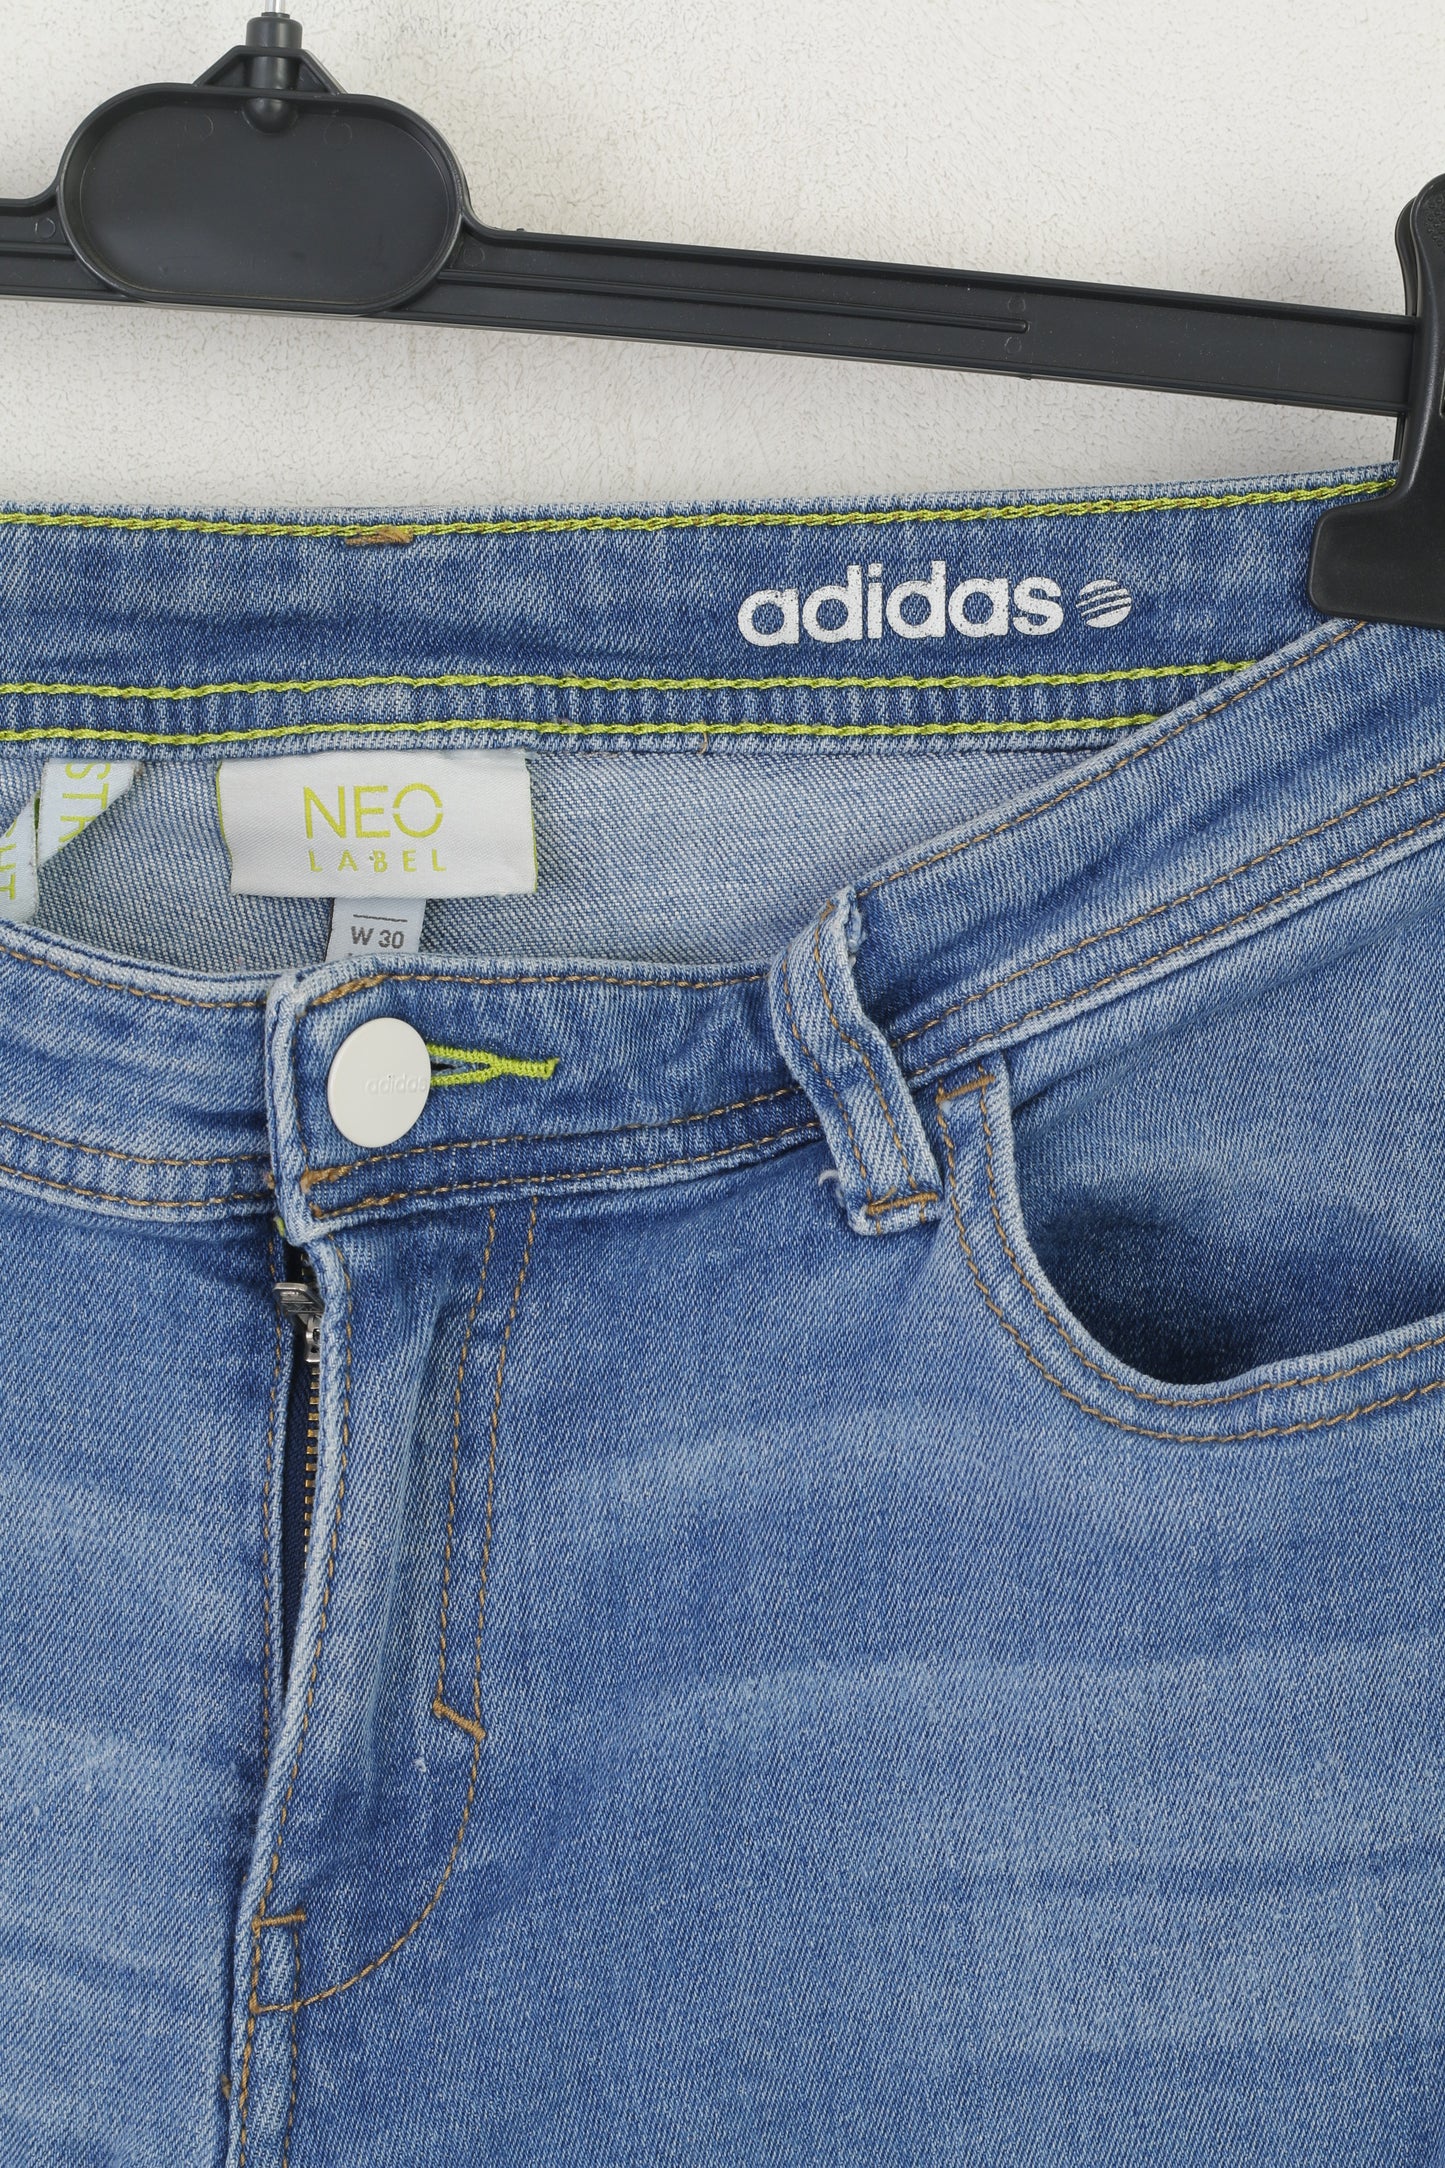 Adidas Neo Label Femme 30 Jeans Pantalon Bleu Coton Pantalon Stretch À Jambe Droite